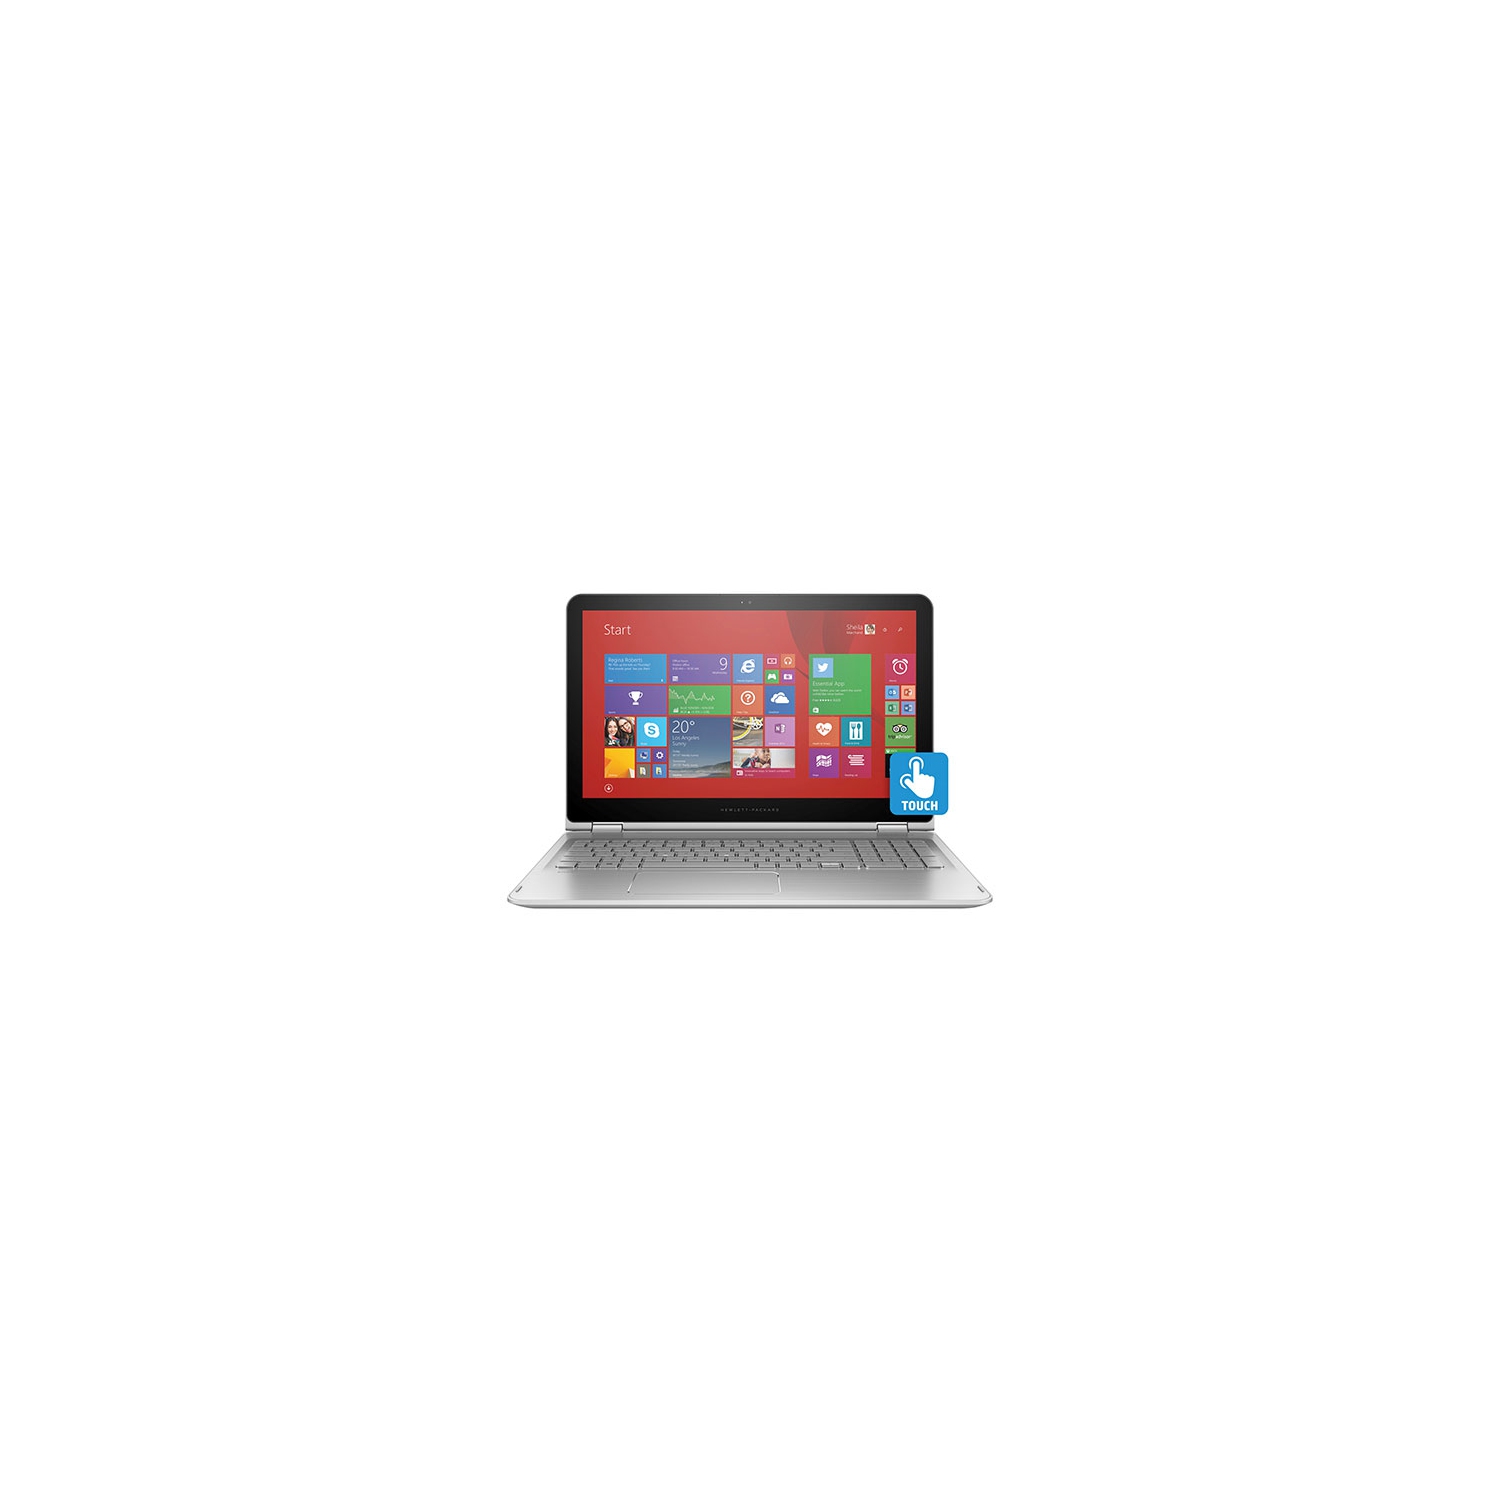 Refurbished (Fair) - HP Envy 15.6" Laptop - Silver (Intel Core i5-5200U / 500 HDD / 8 RAM / Windows 8.1)